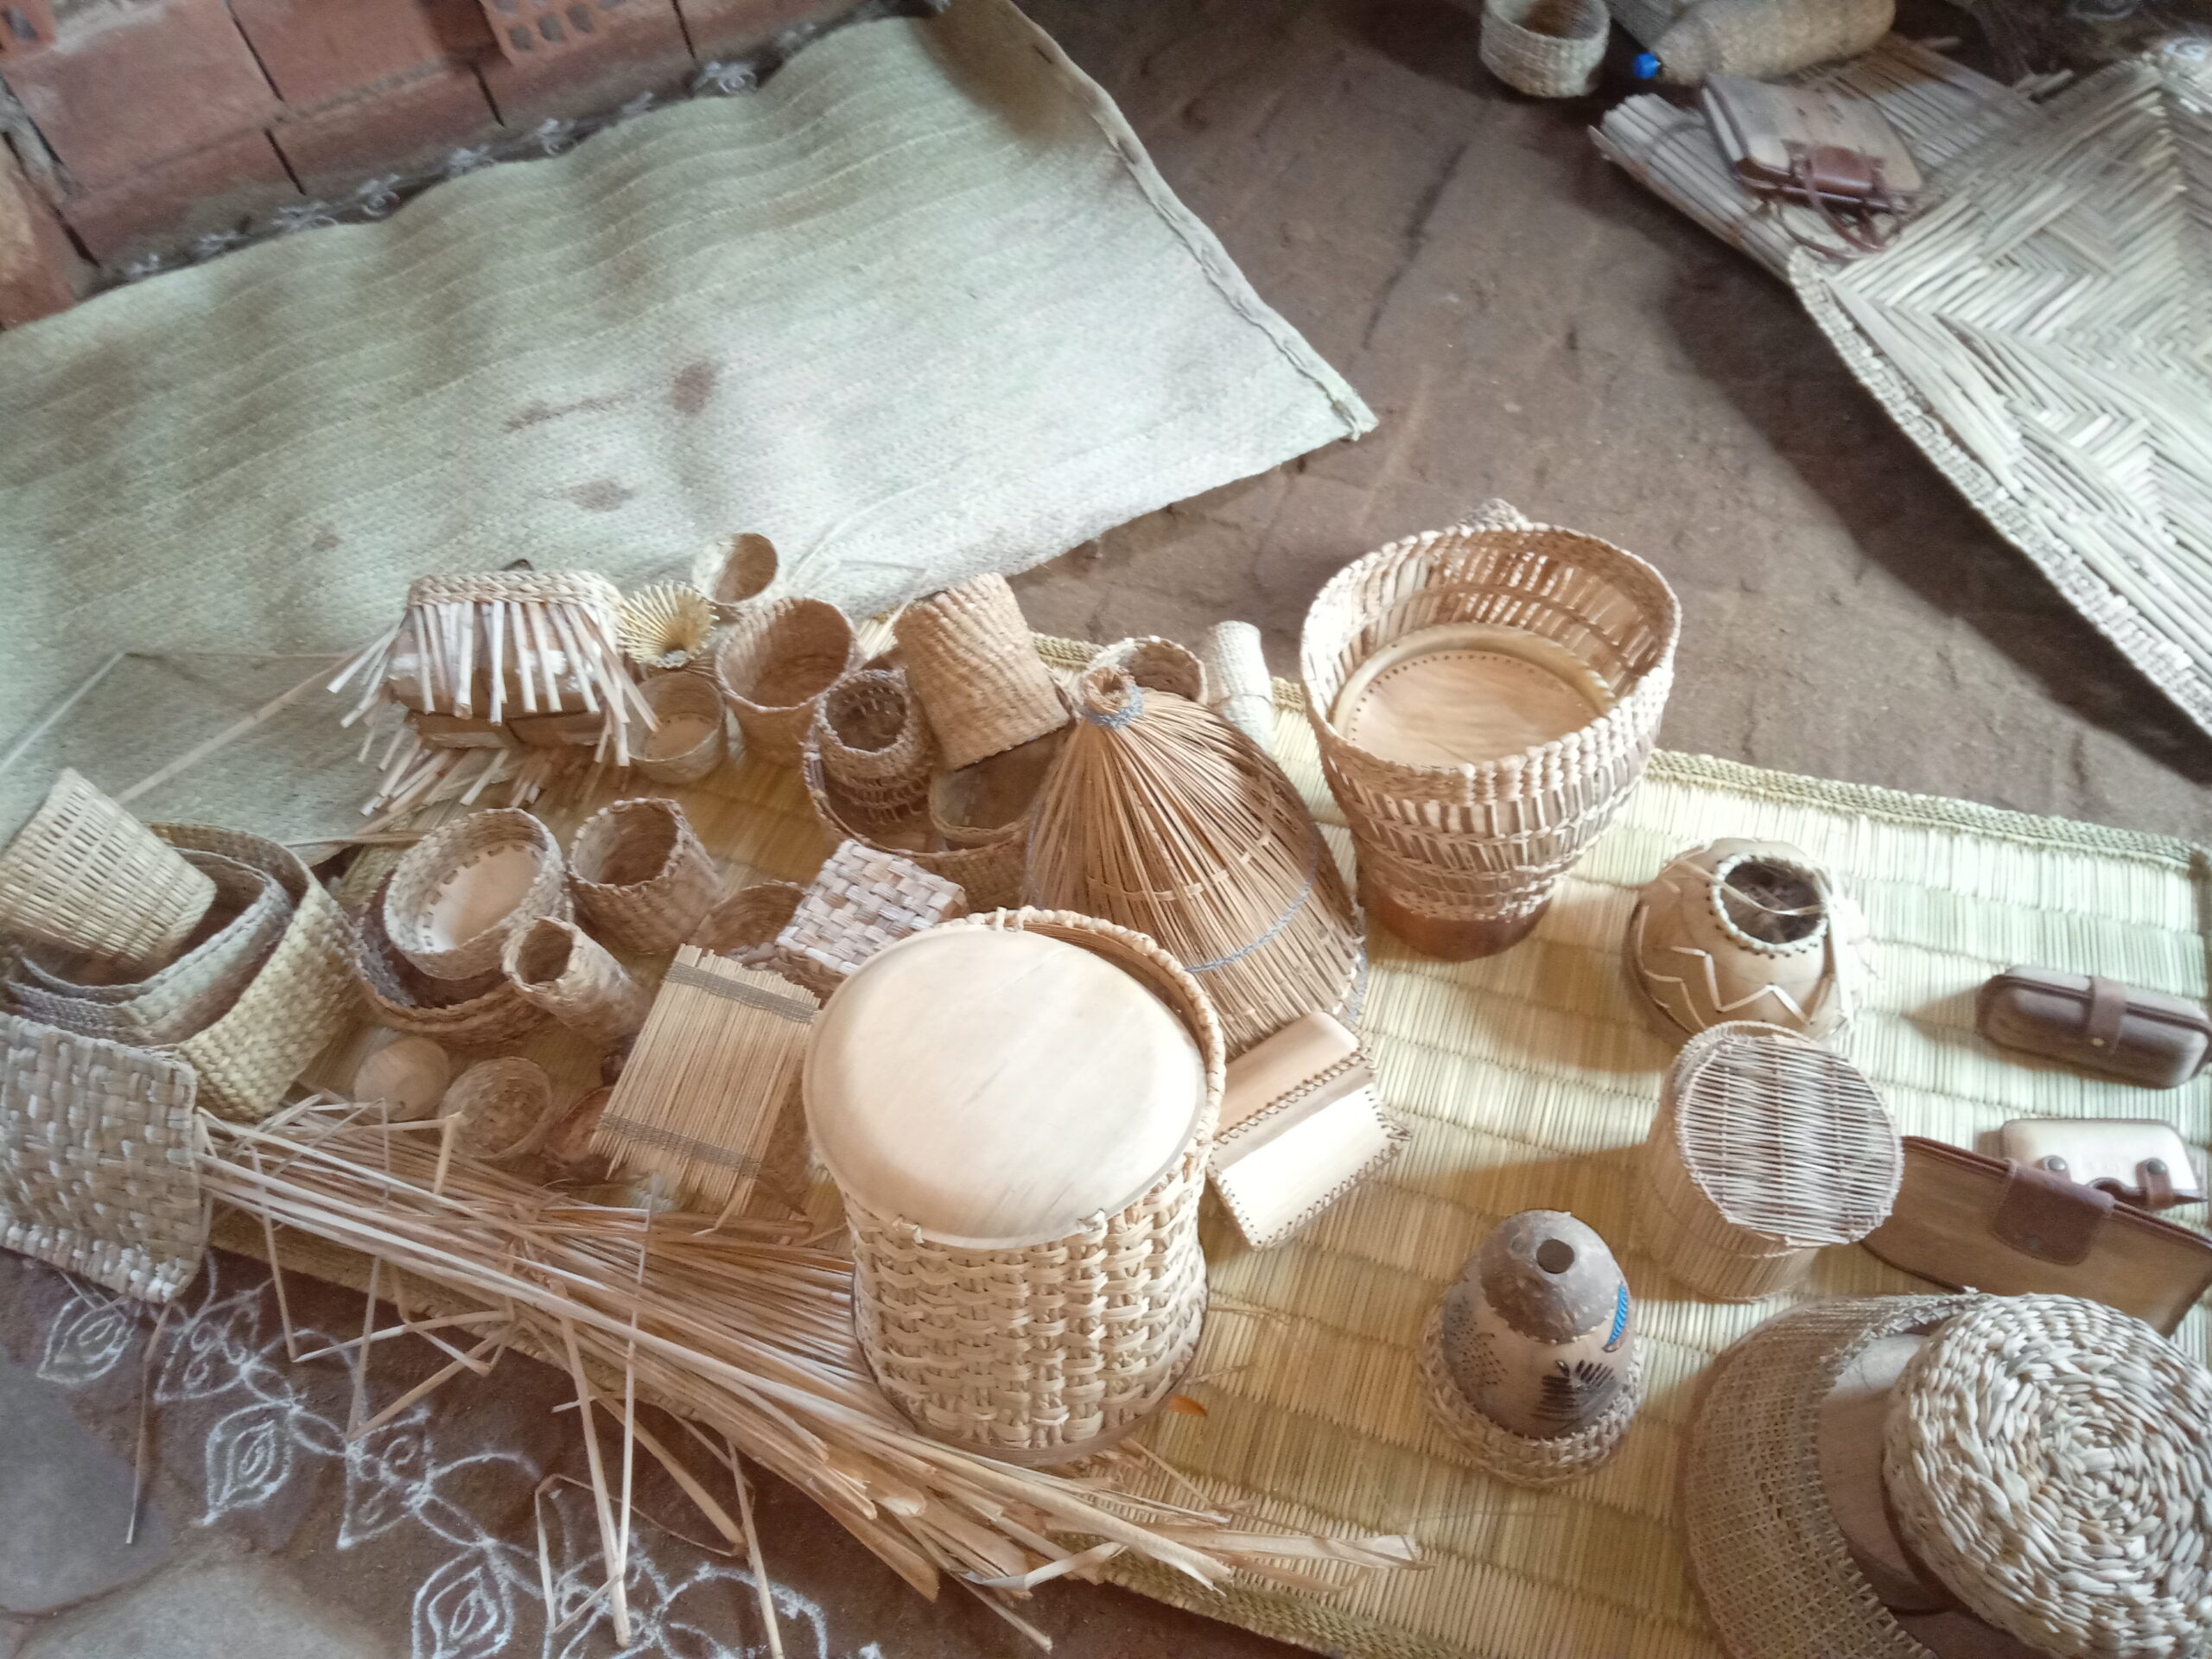 The Handmade Revival: Rebirth of Artisanal Craft Businesses